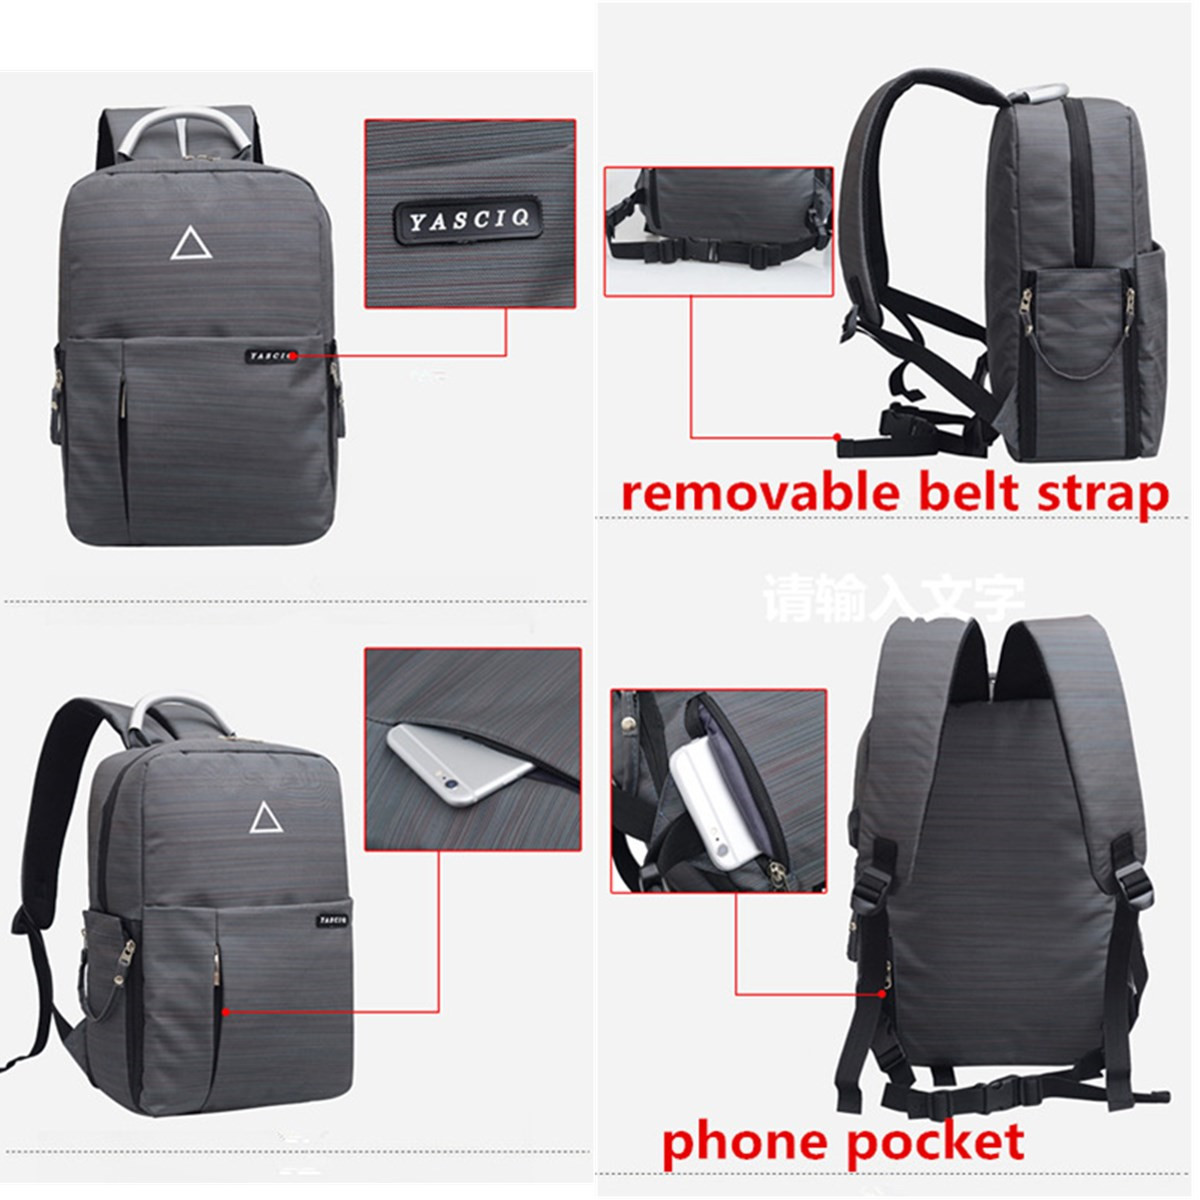 YASCIQ B-10719 USB Charging Camera Bag Backpack for DSLR Camera Lens Tripod 10